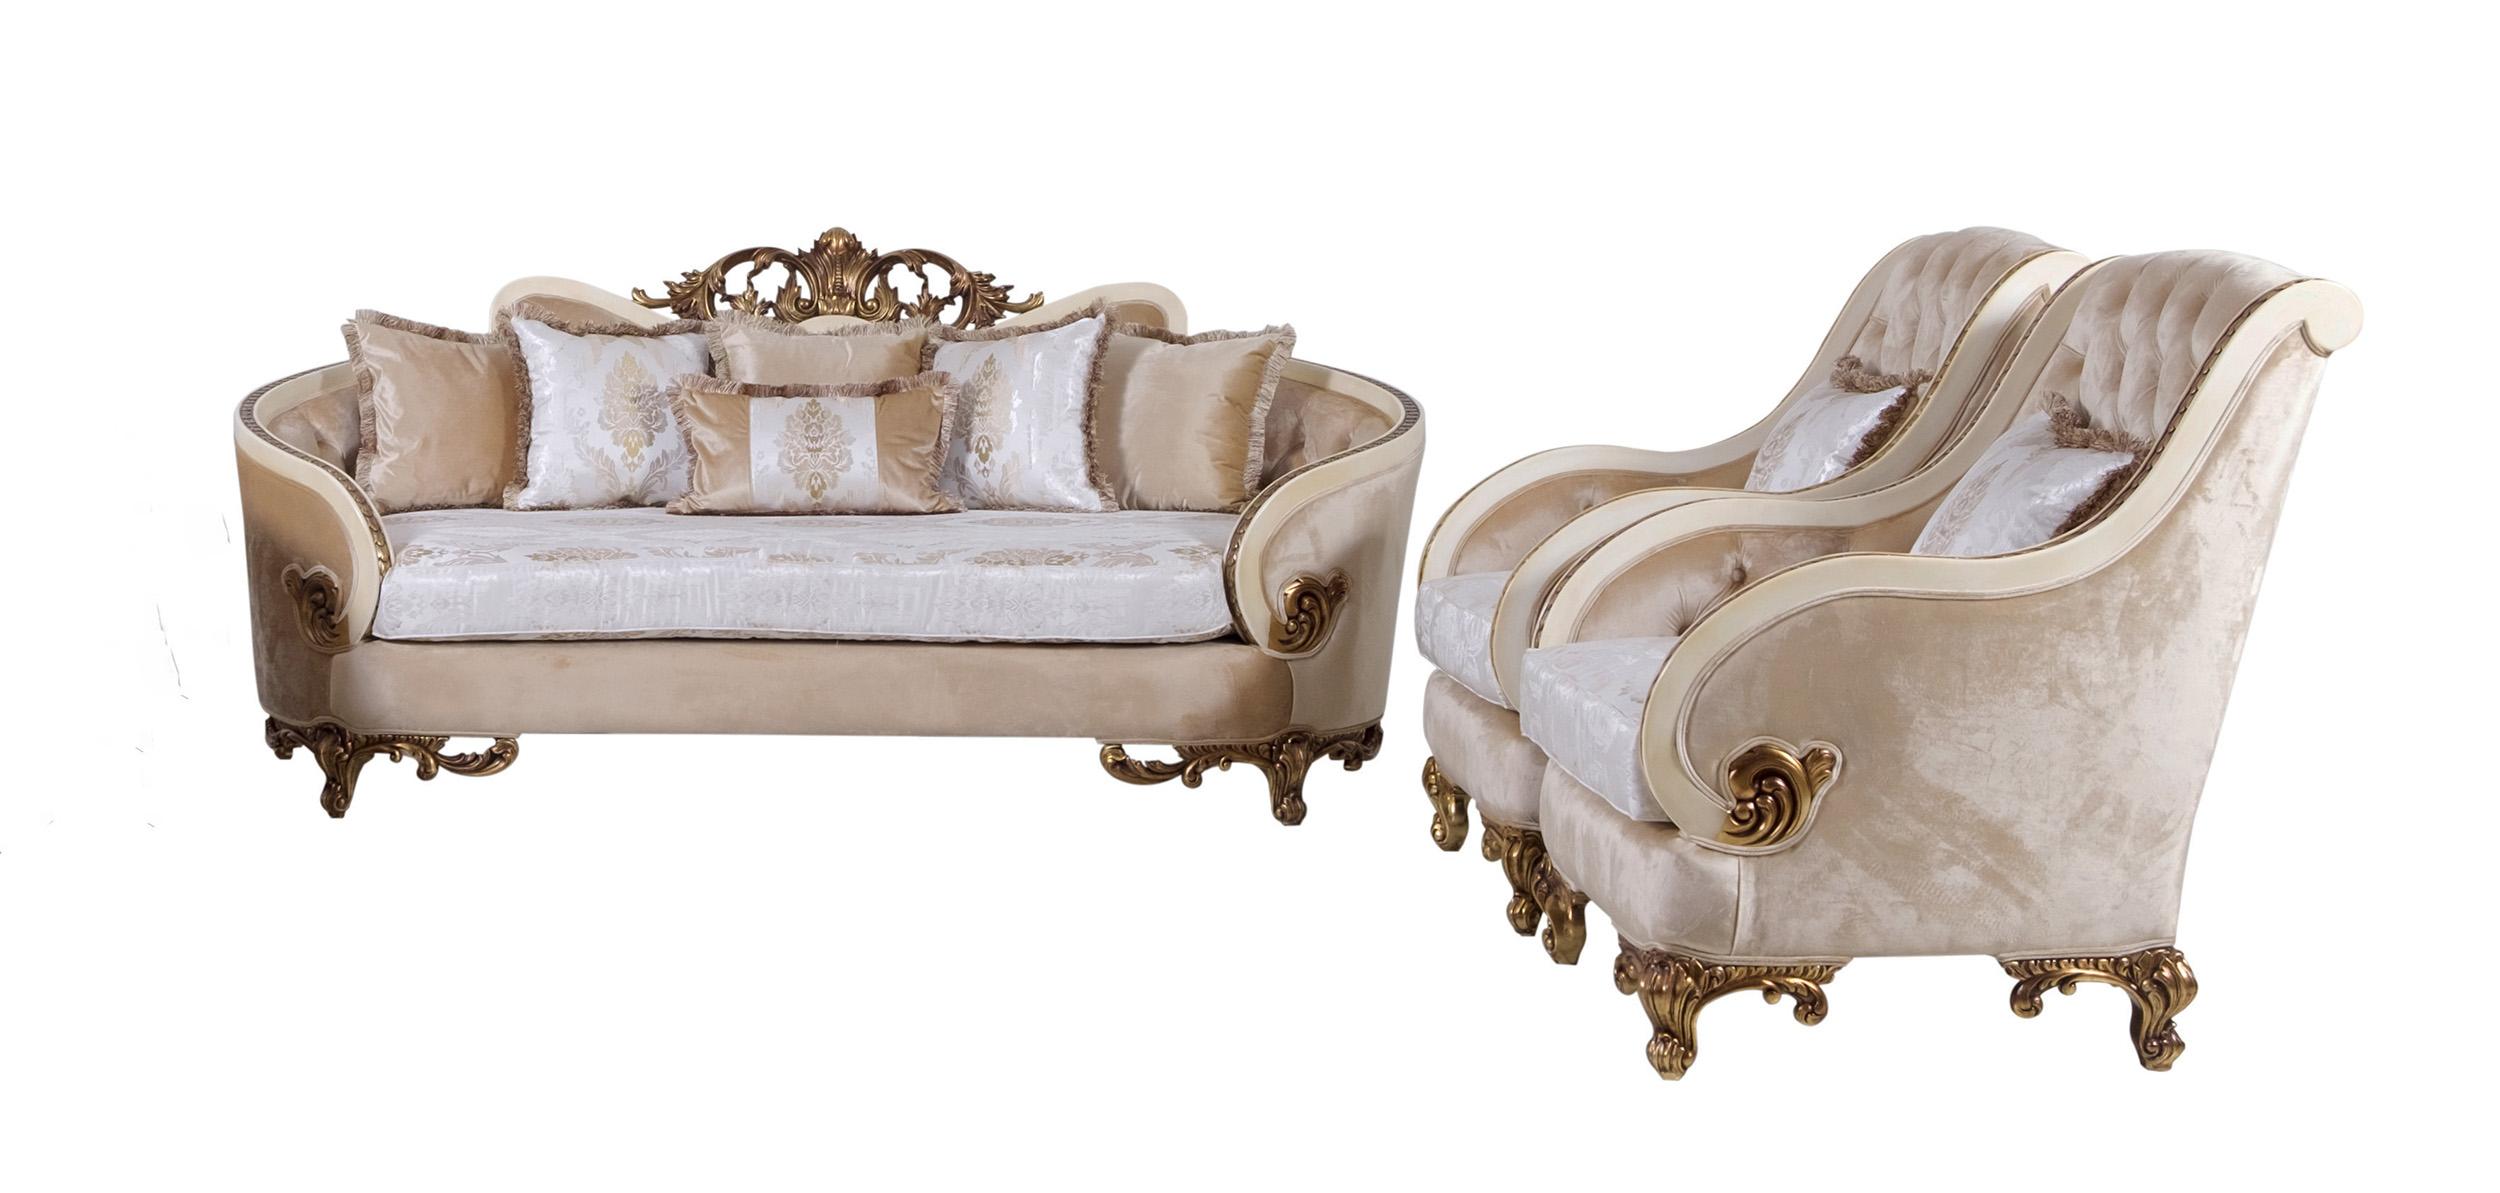 Classic, Traditional Sofa Set ROSABELLA 36031-Set-3 in Antique, Gold, Beige Fabric